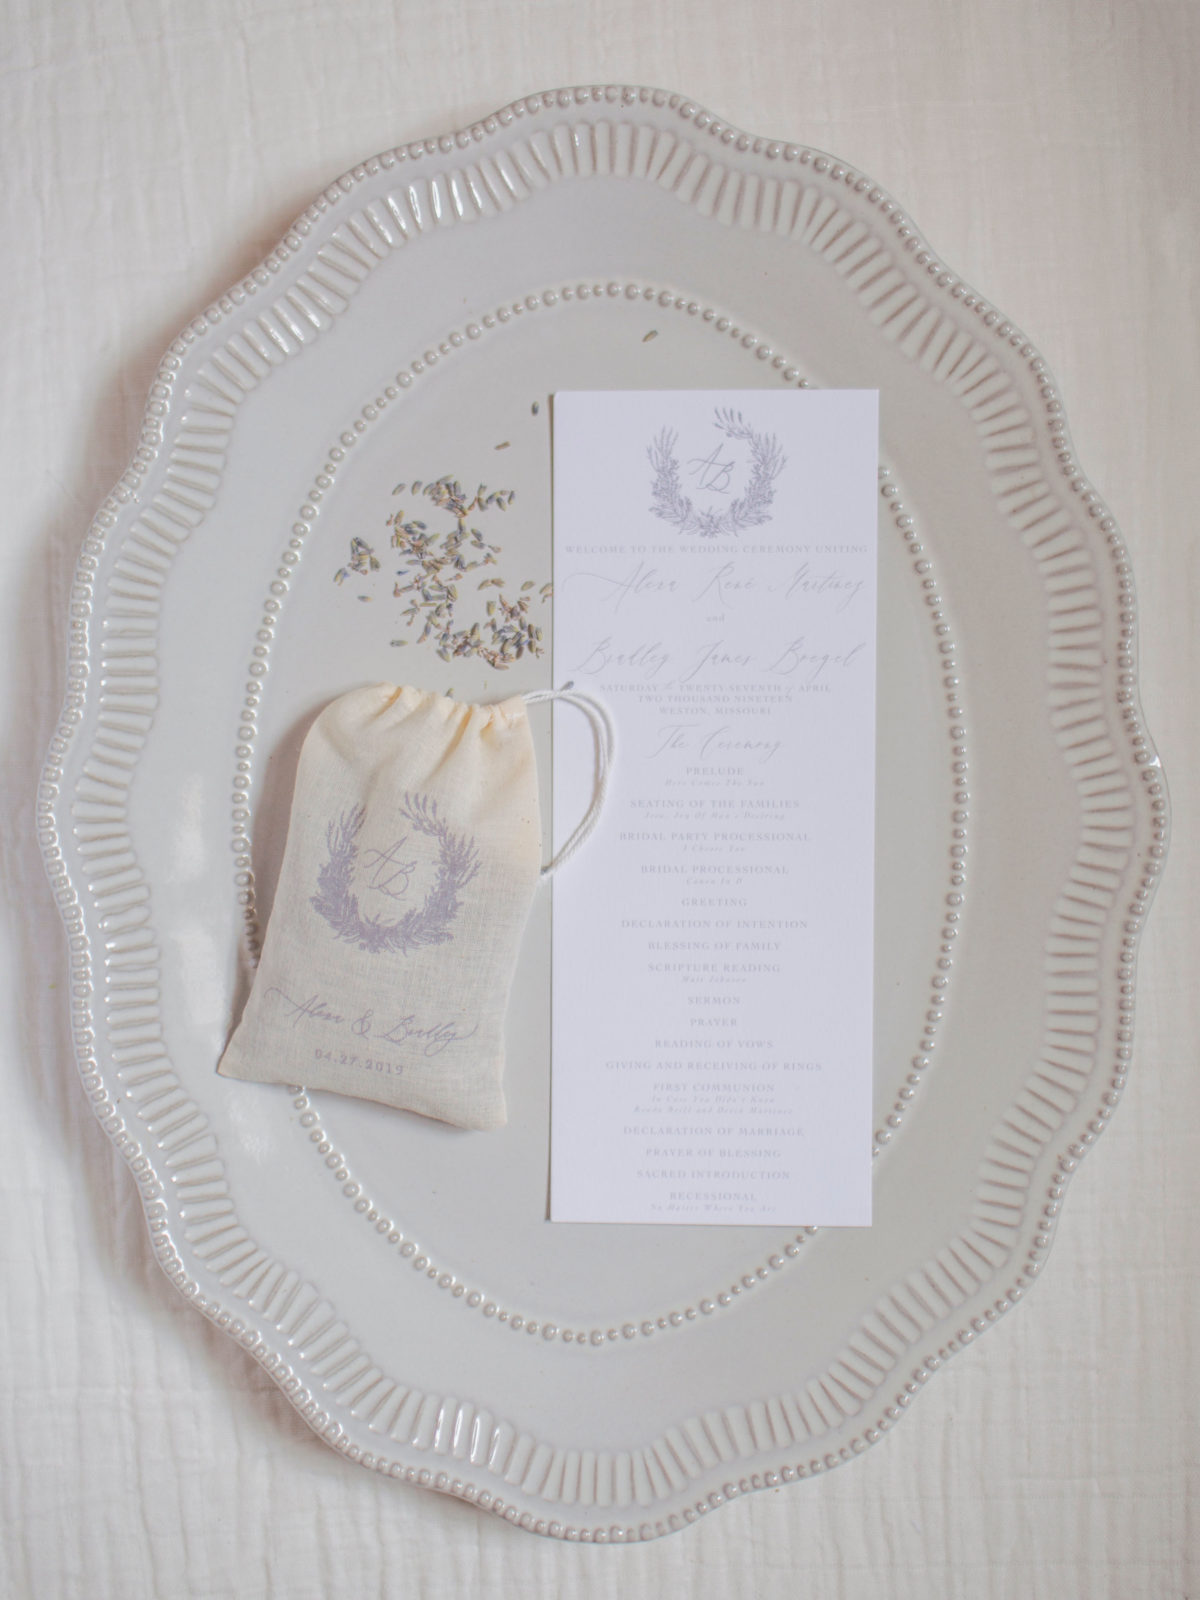 Reception-Details-Weston-Red-Barn-Farm-Kansas-City-|-Blue-Bouquet-Kansas-City-Wedding-Florist